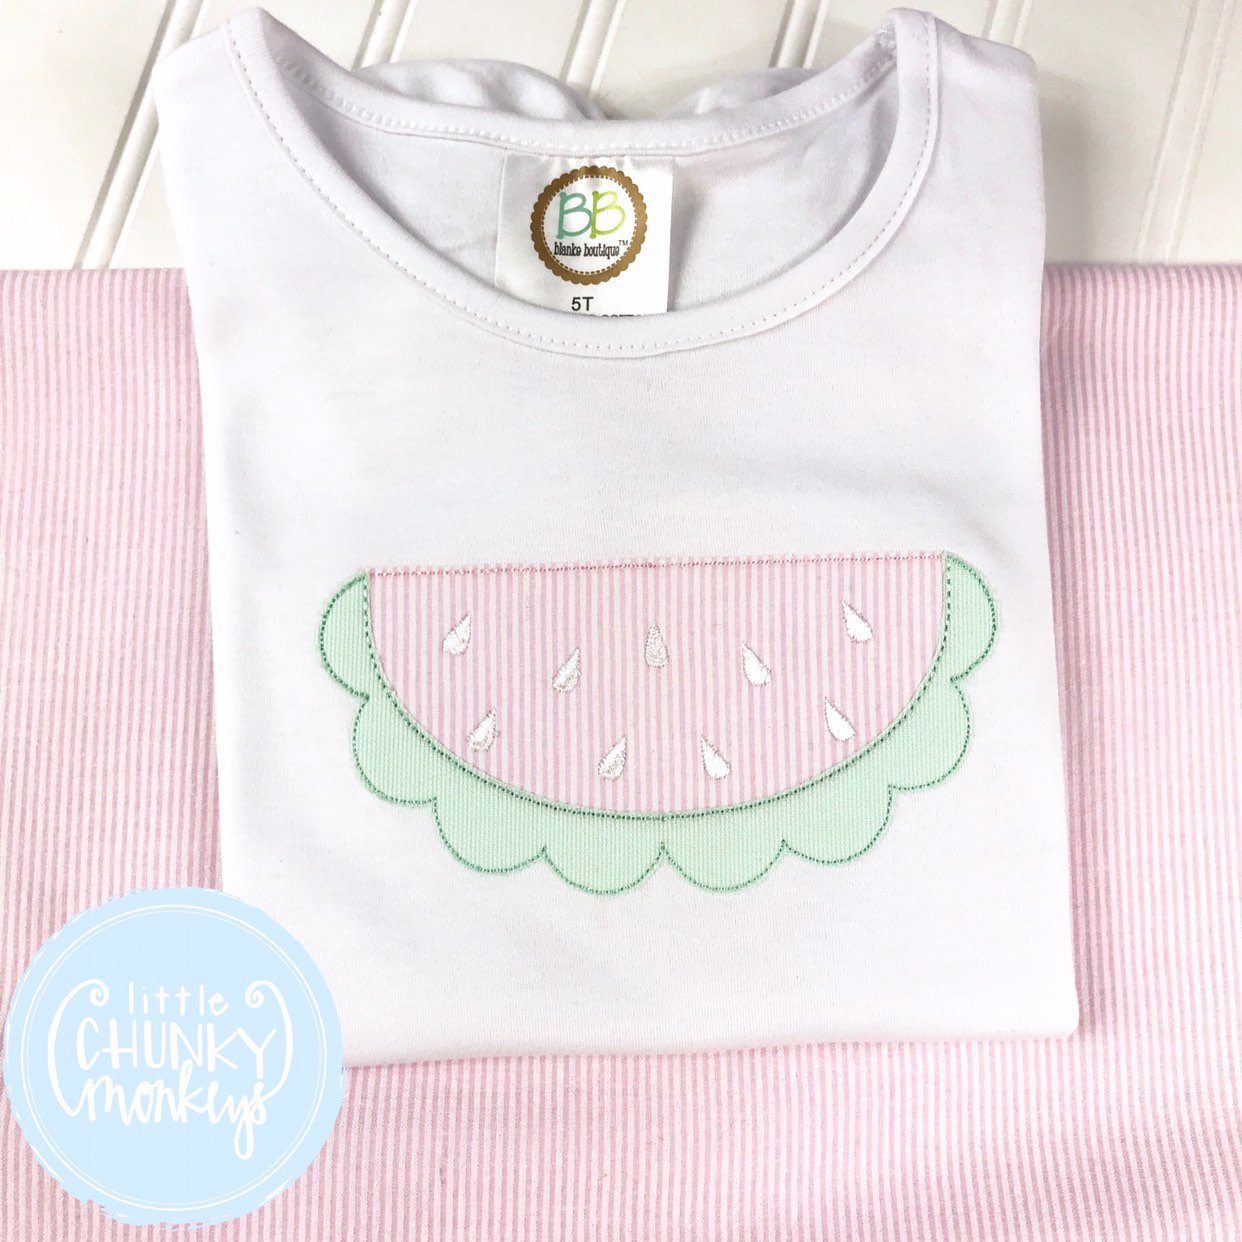 Girl Shirt - Watermelon Shirt